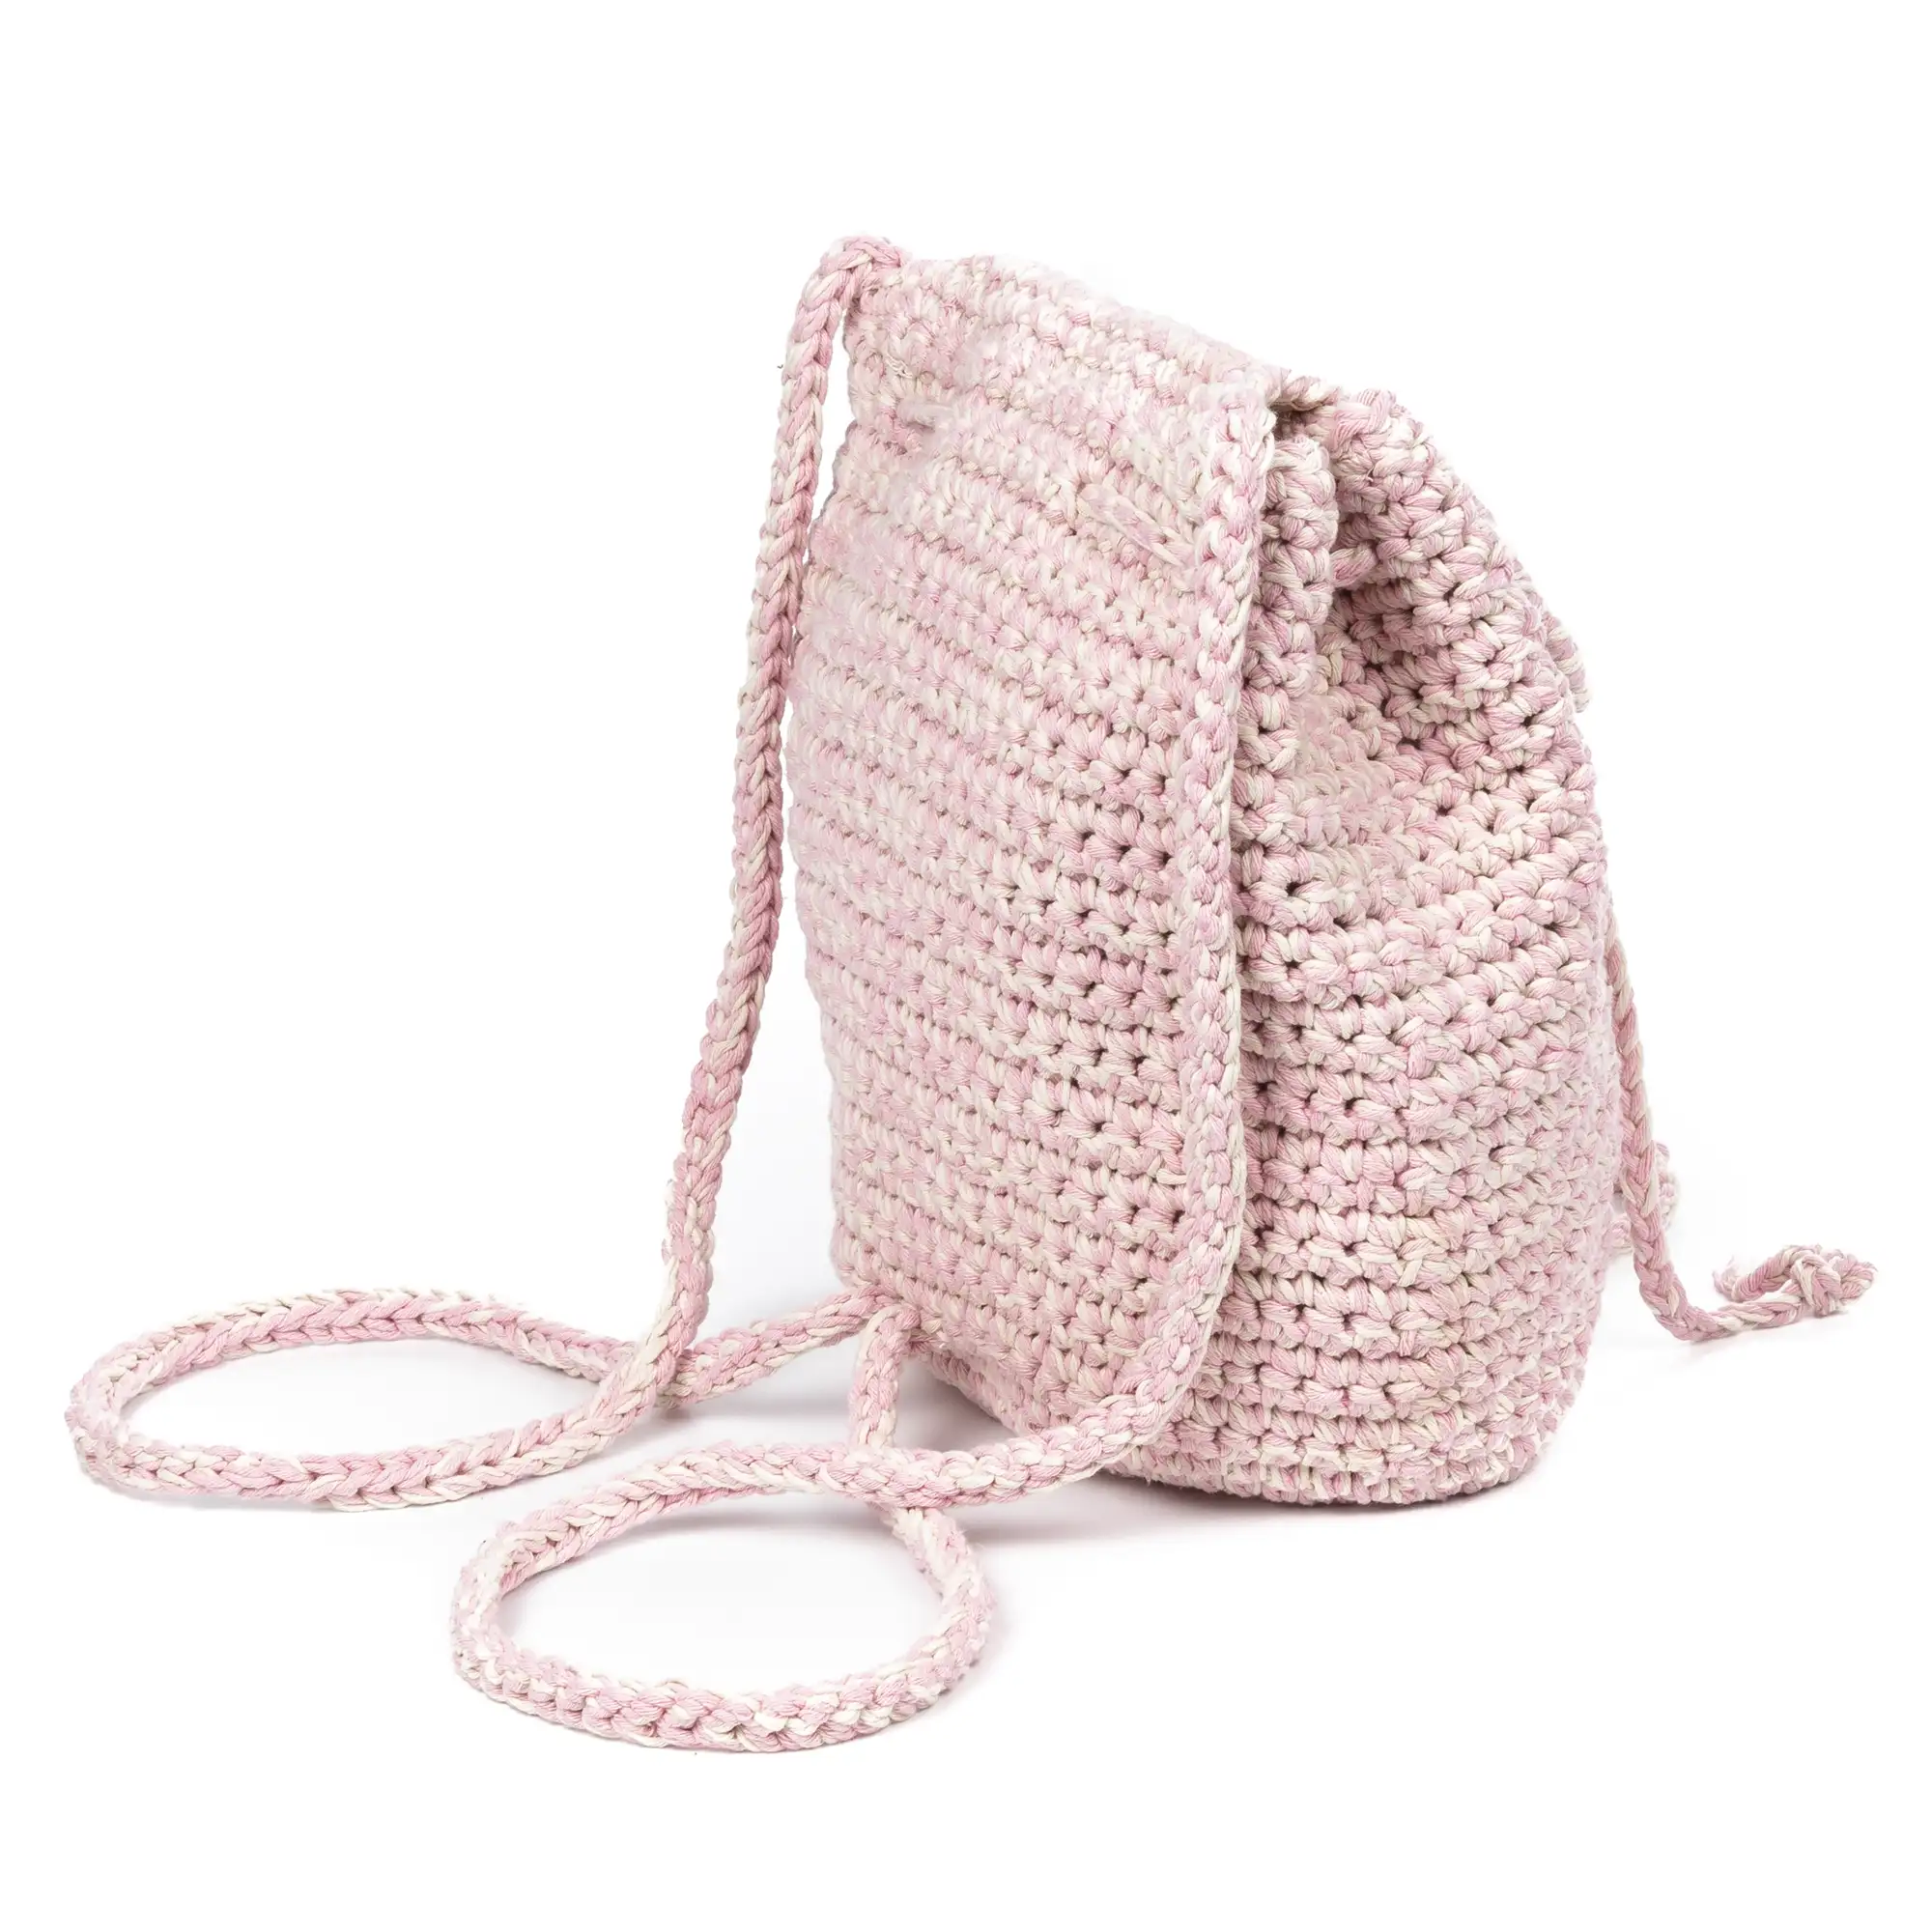 Laura Bolso mochila Mujer. Tejido Algodón Crochet